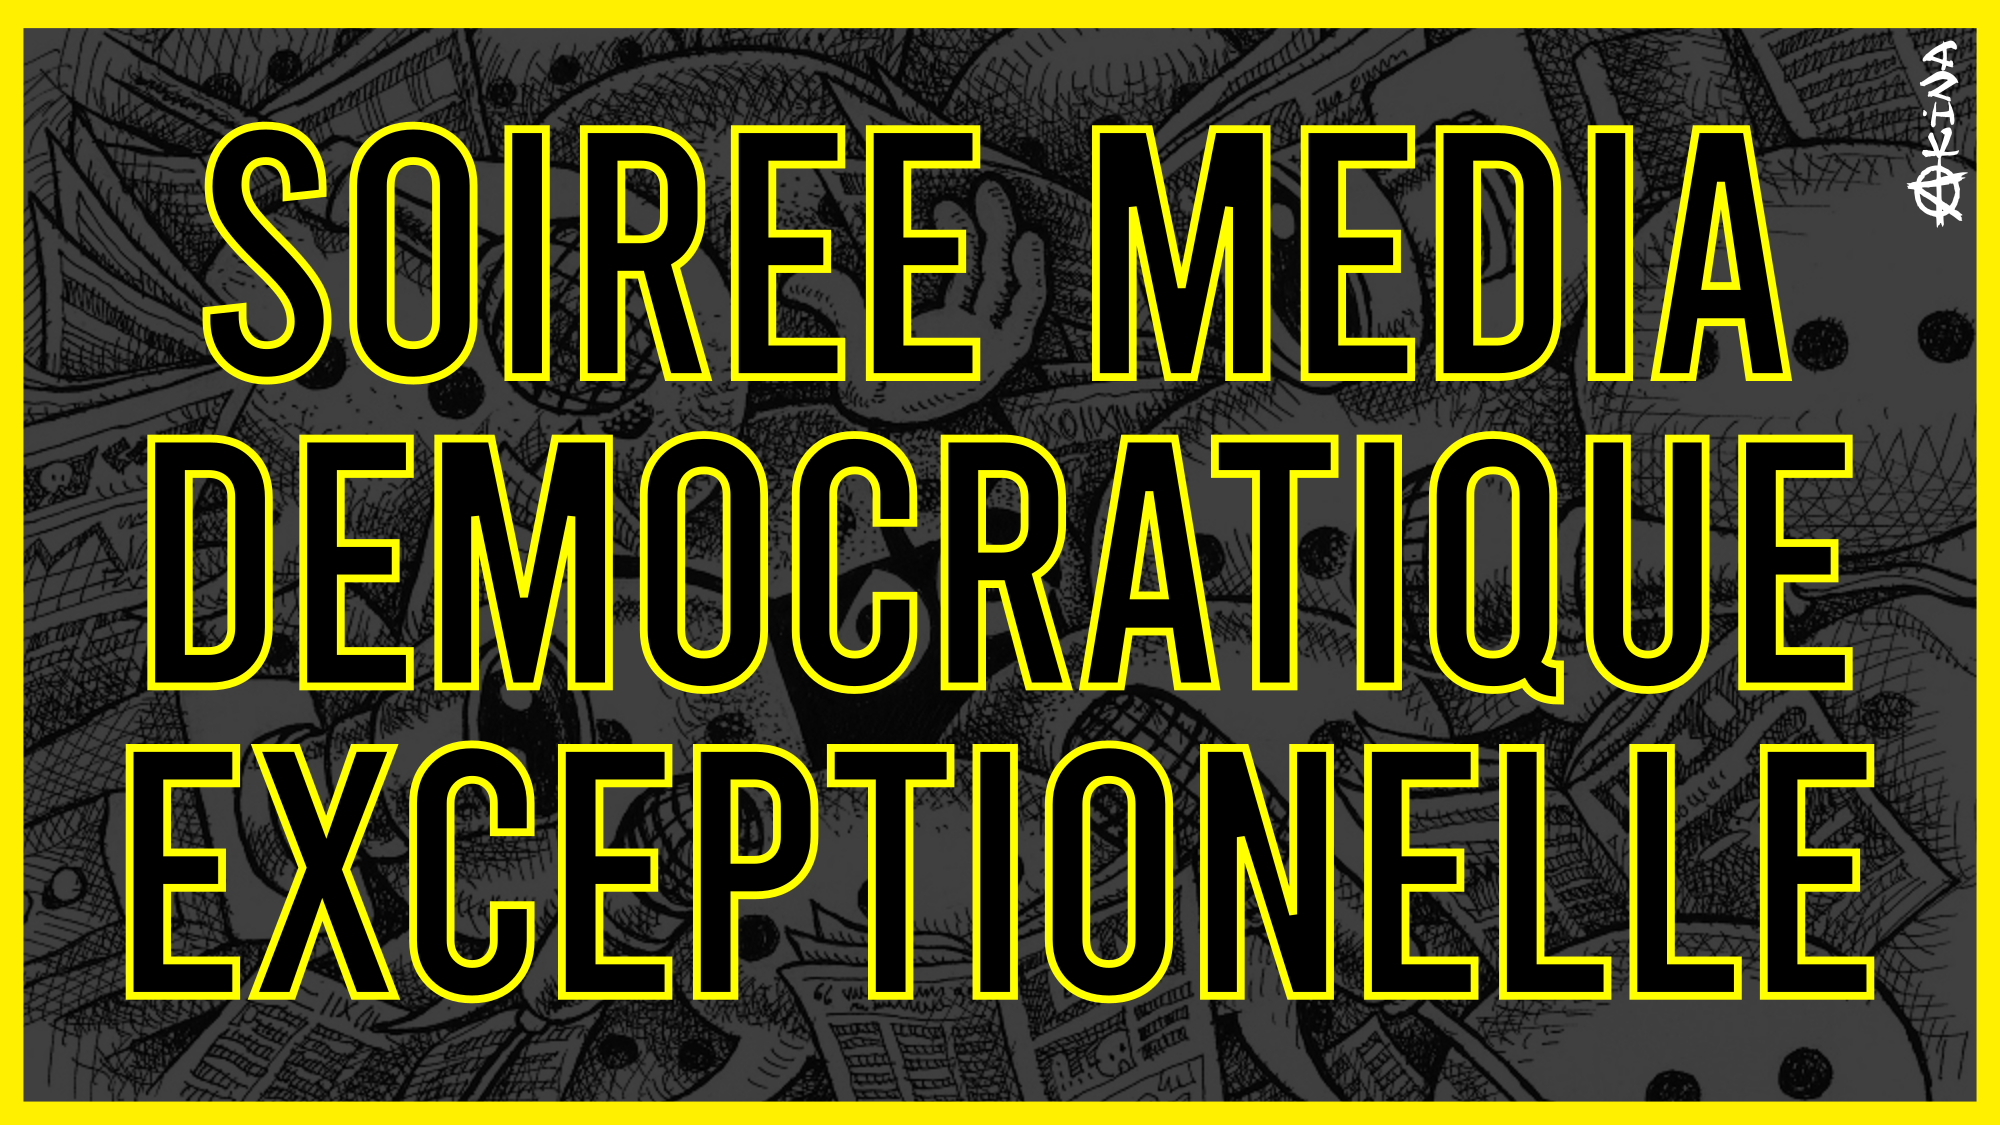 Soiree Media Democratique Exceptionnelle